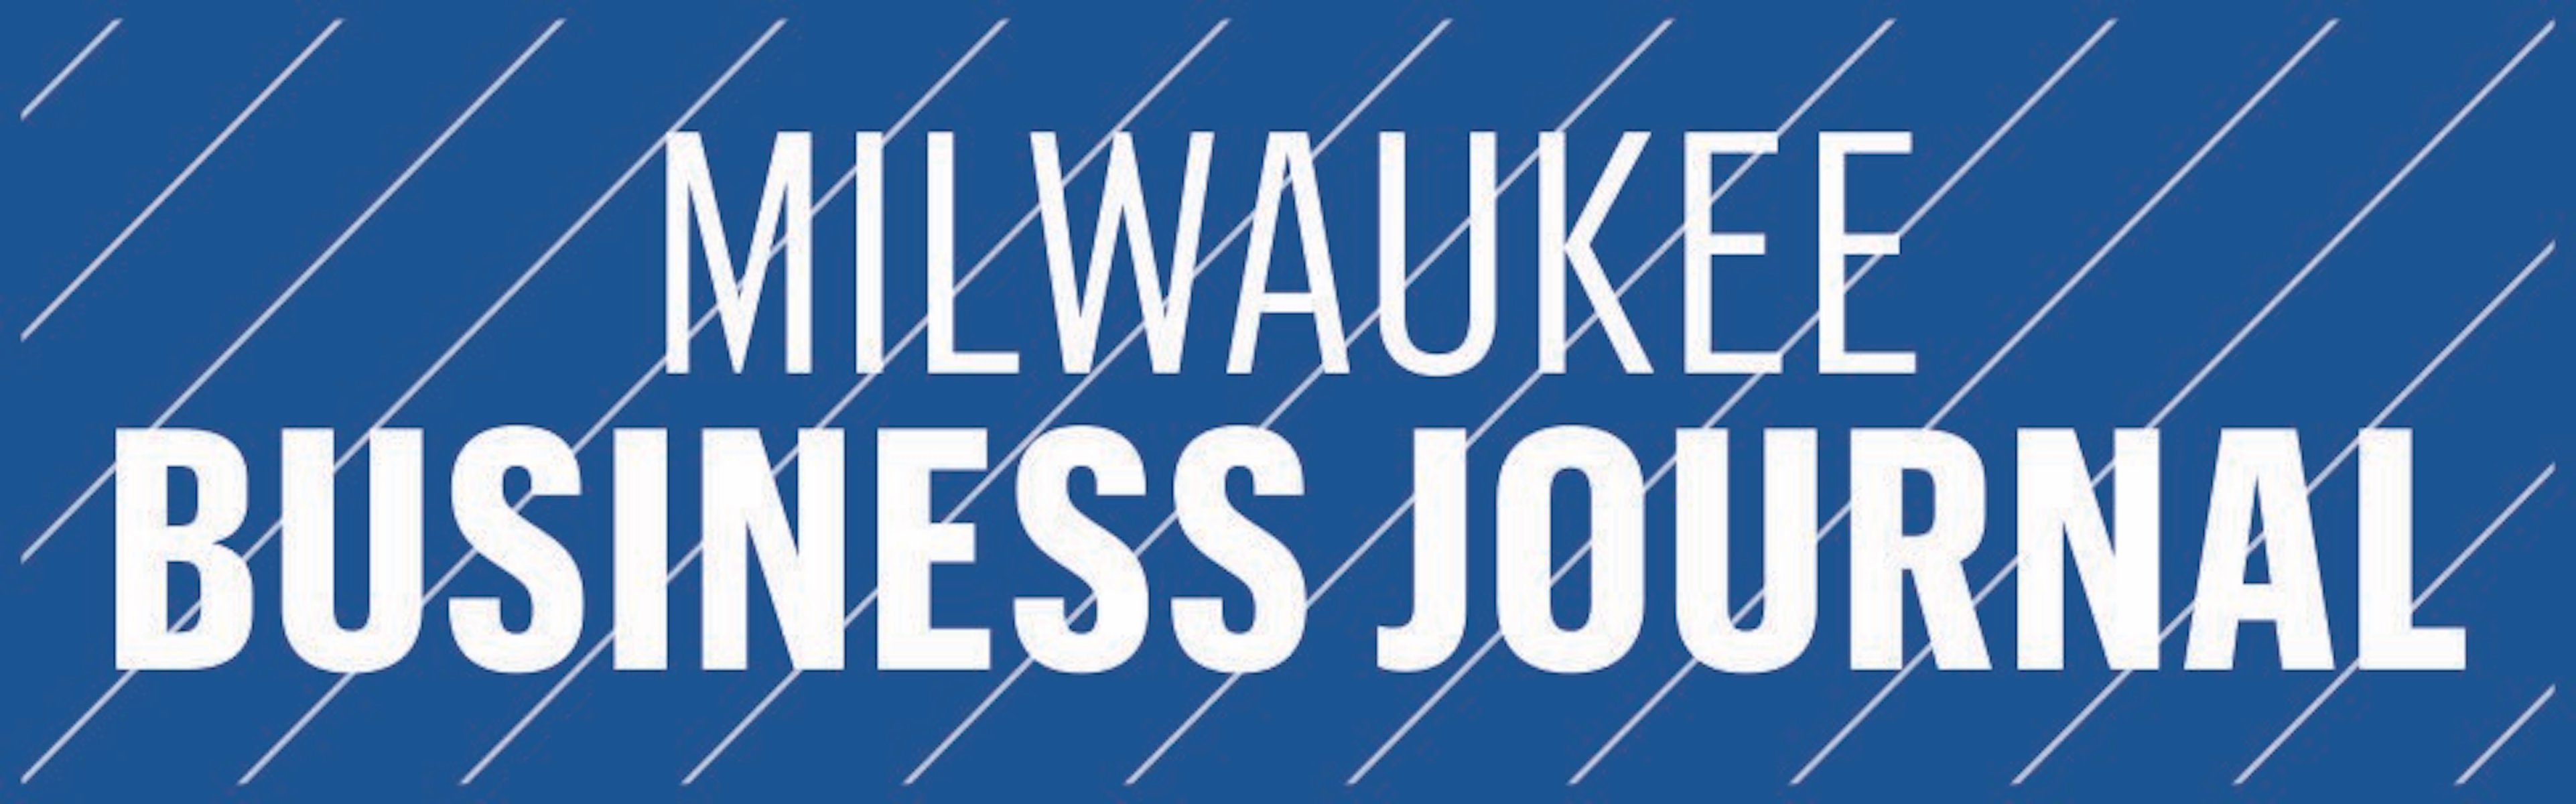 Milwaukee Business Journal